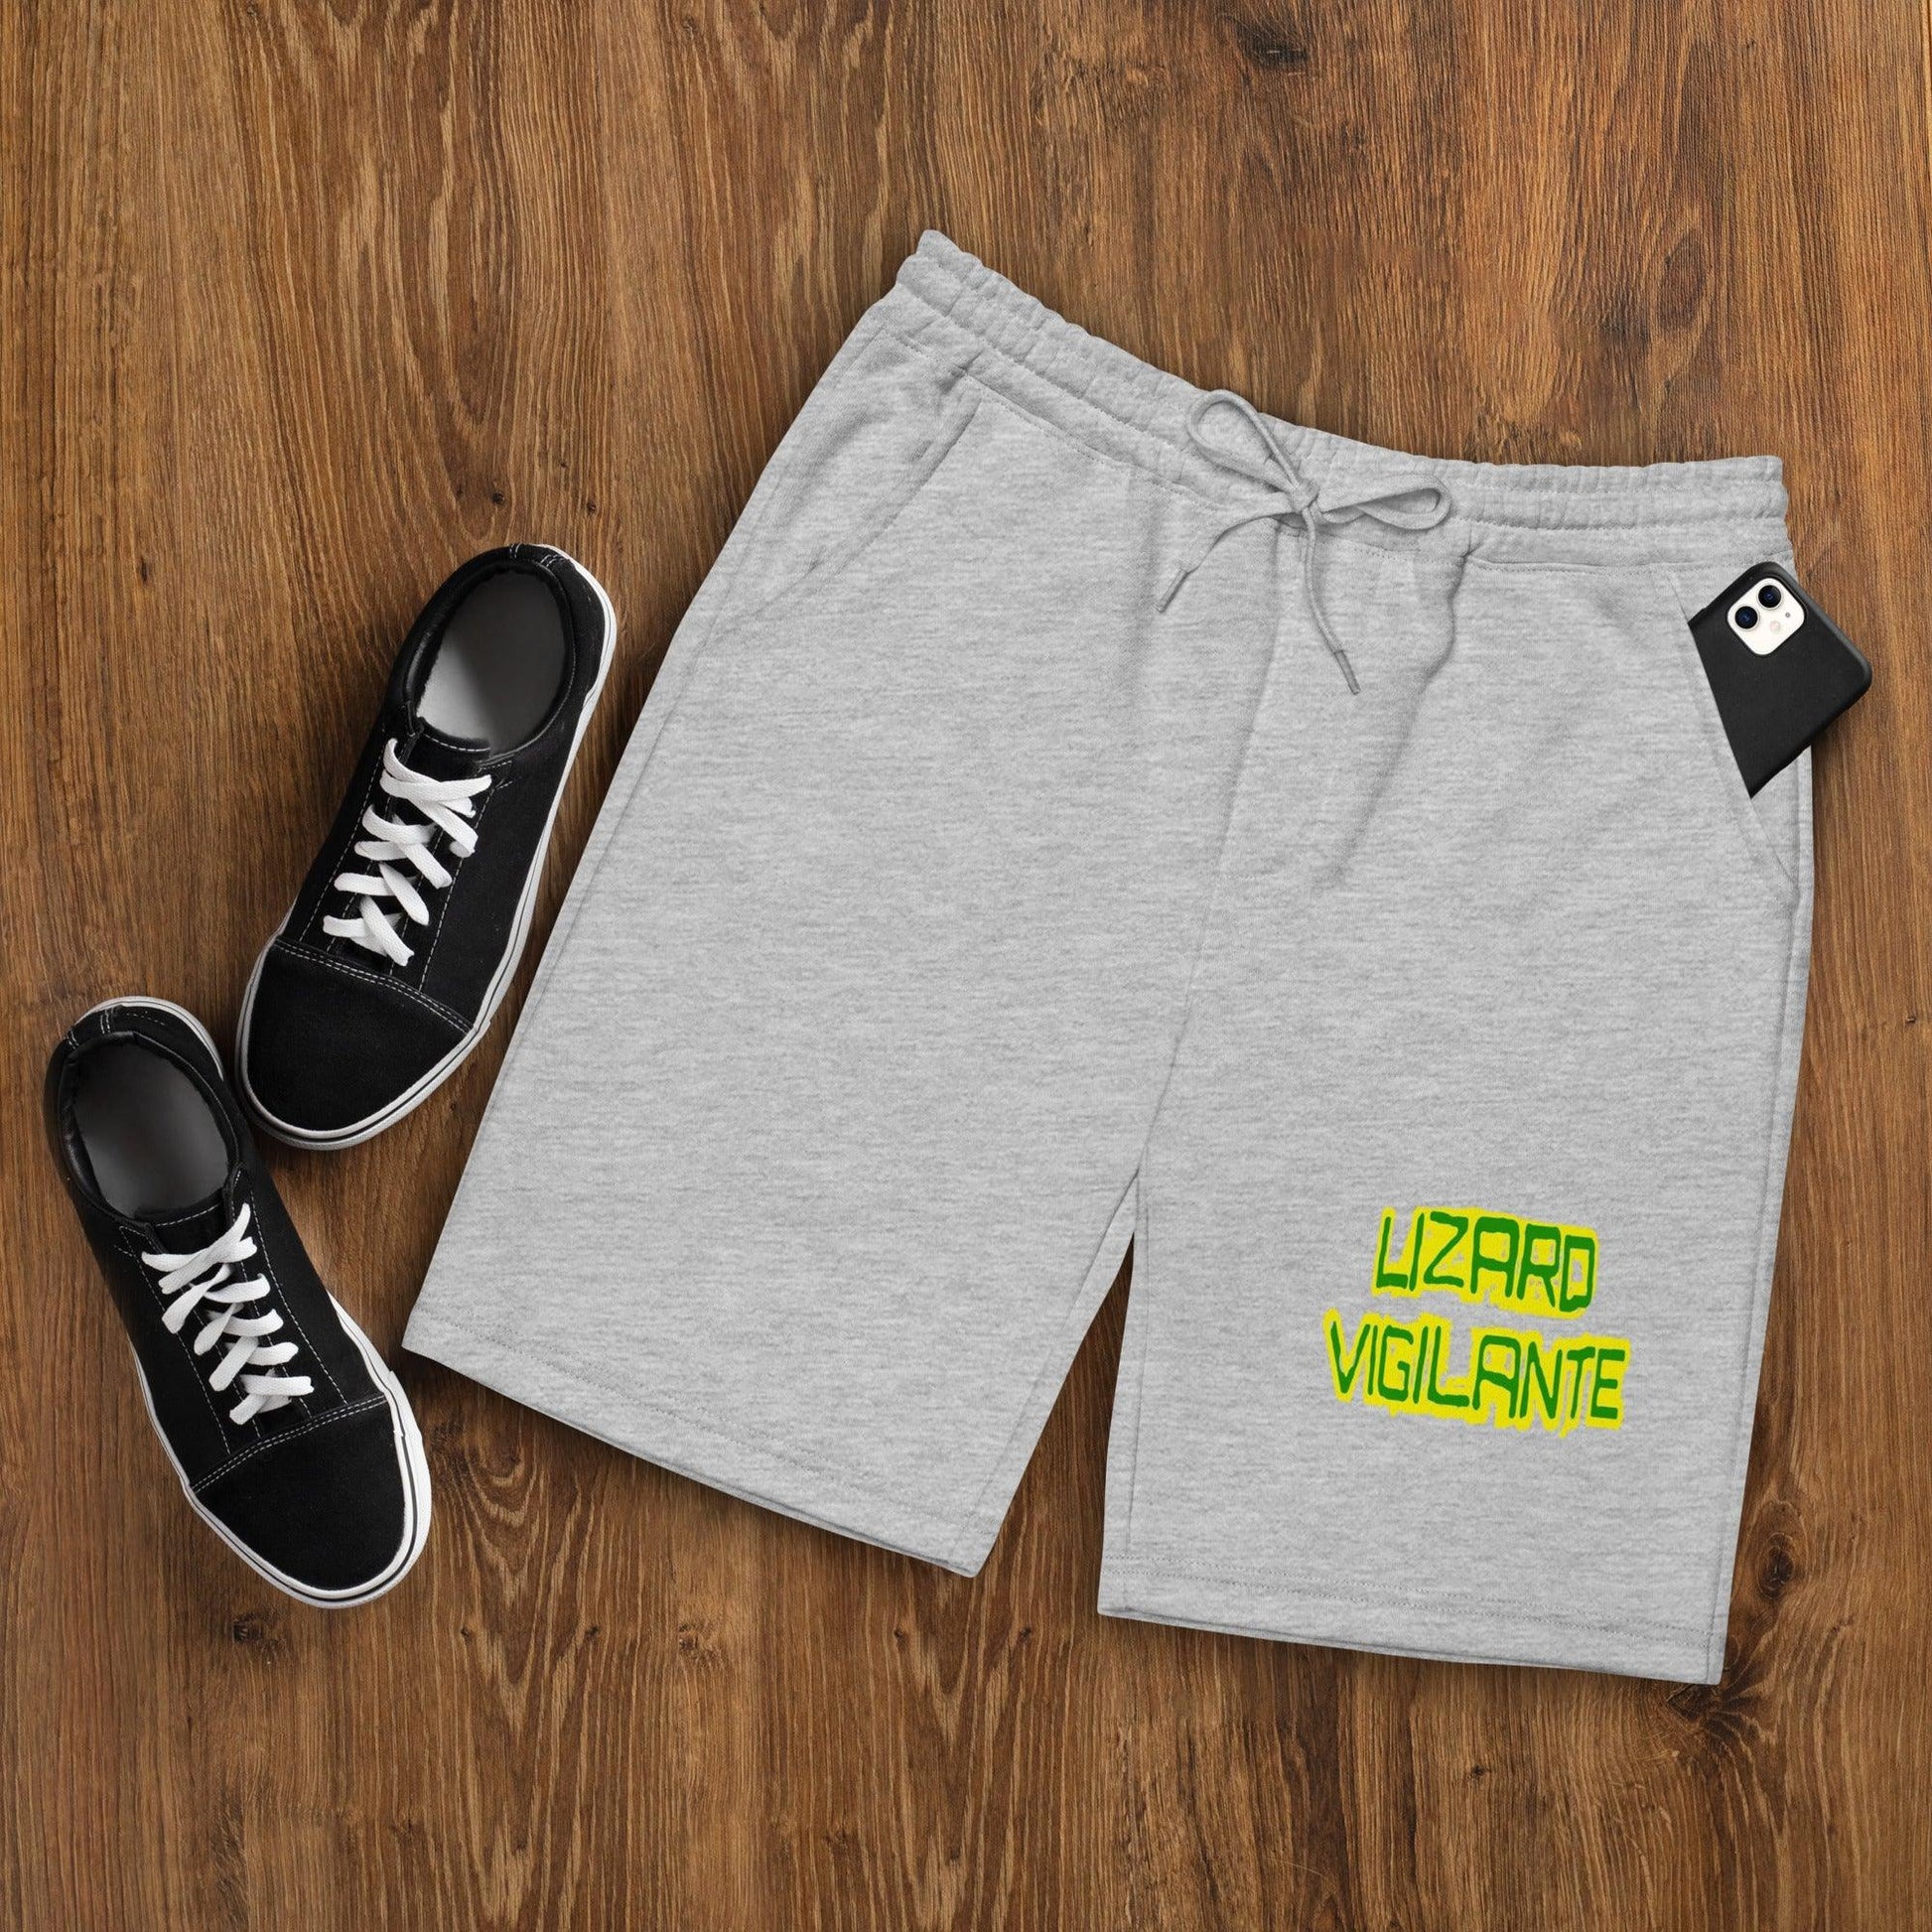 Lizard Vigilante Logoo Men's fleece shorts - Lizard Vigilante